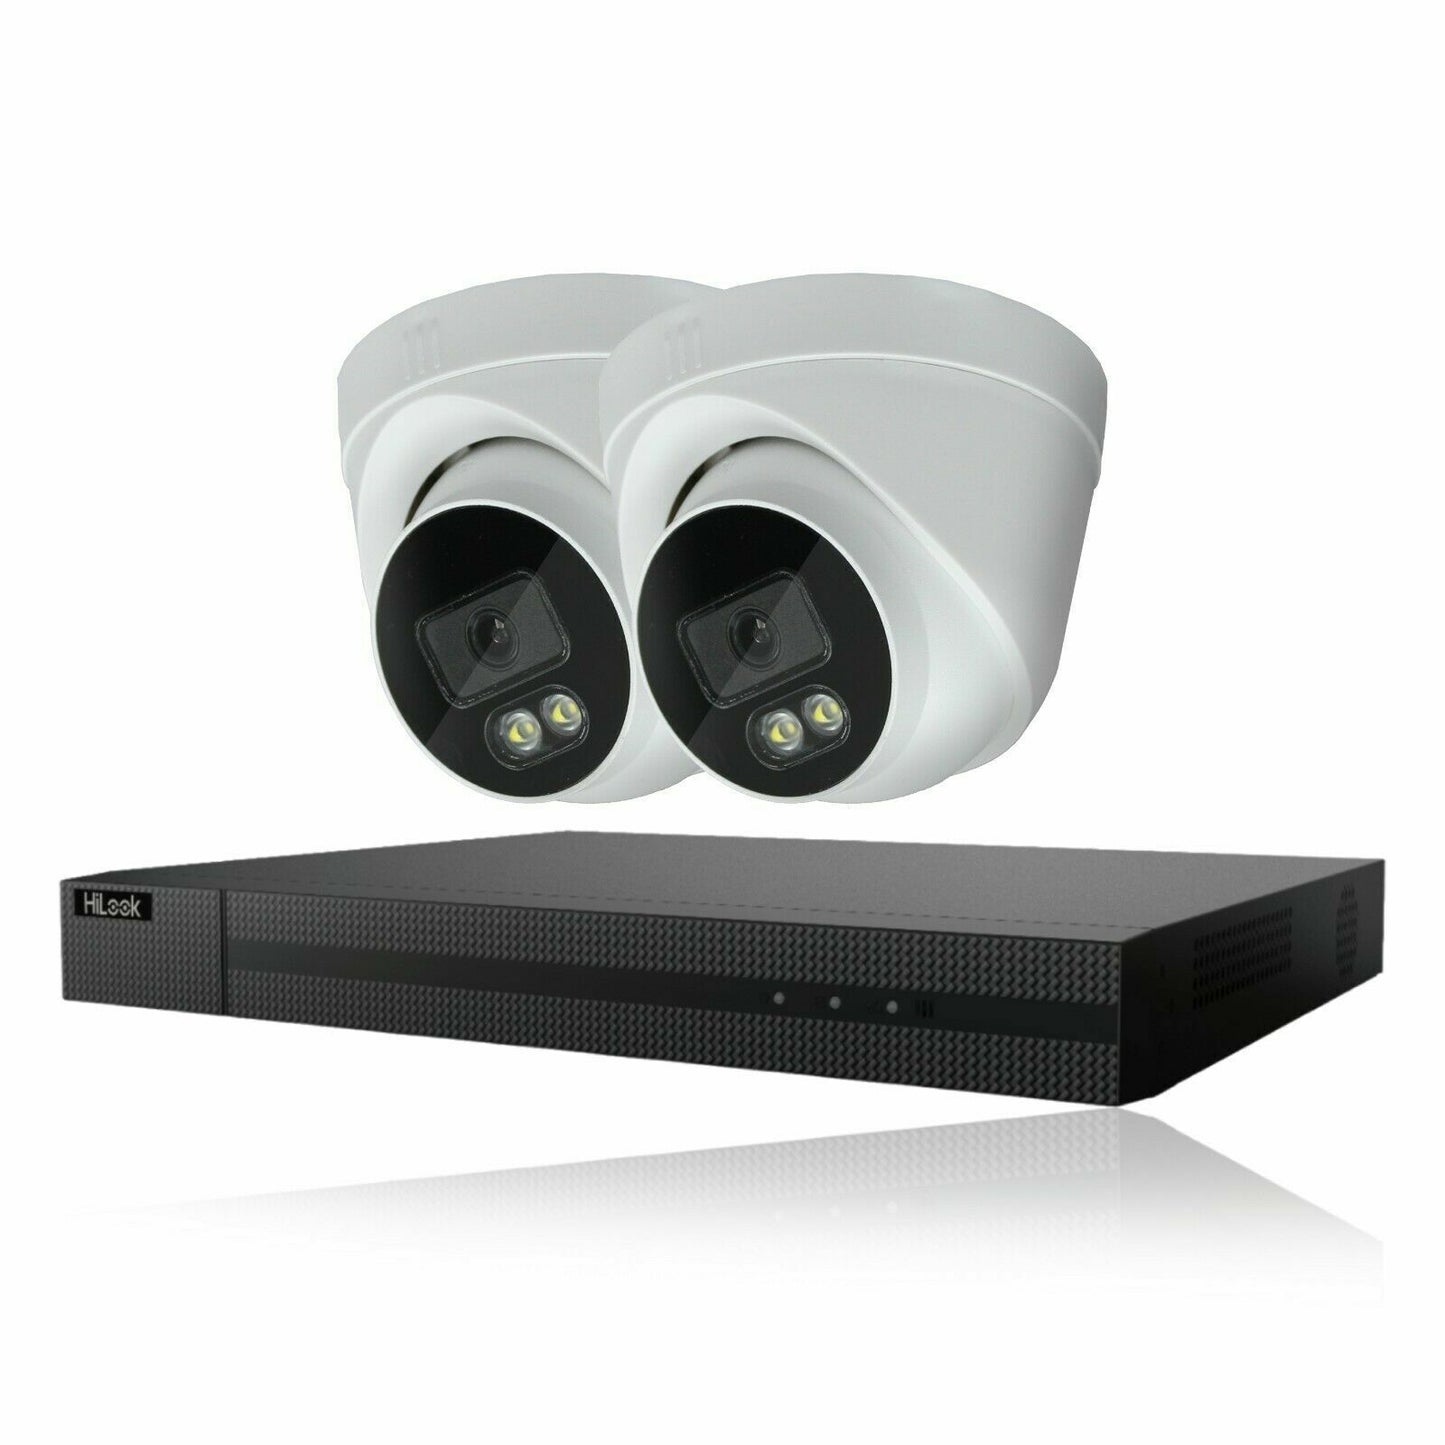 HIKVISION HILOOK COLOURVU 5MP CCTV SYSTEM UHD AUDIO MIC DVR CAMERAS SECURITY KIT 4CH DVR 2xCameras 1TB HDD